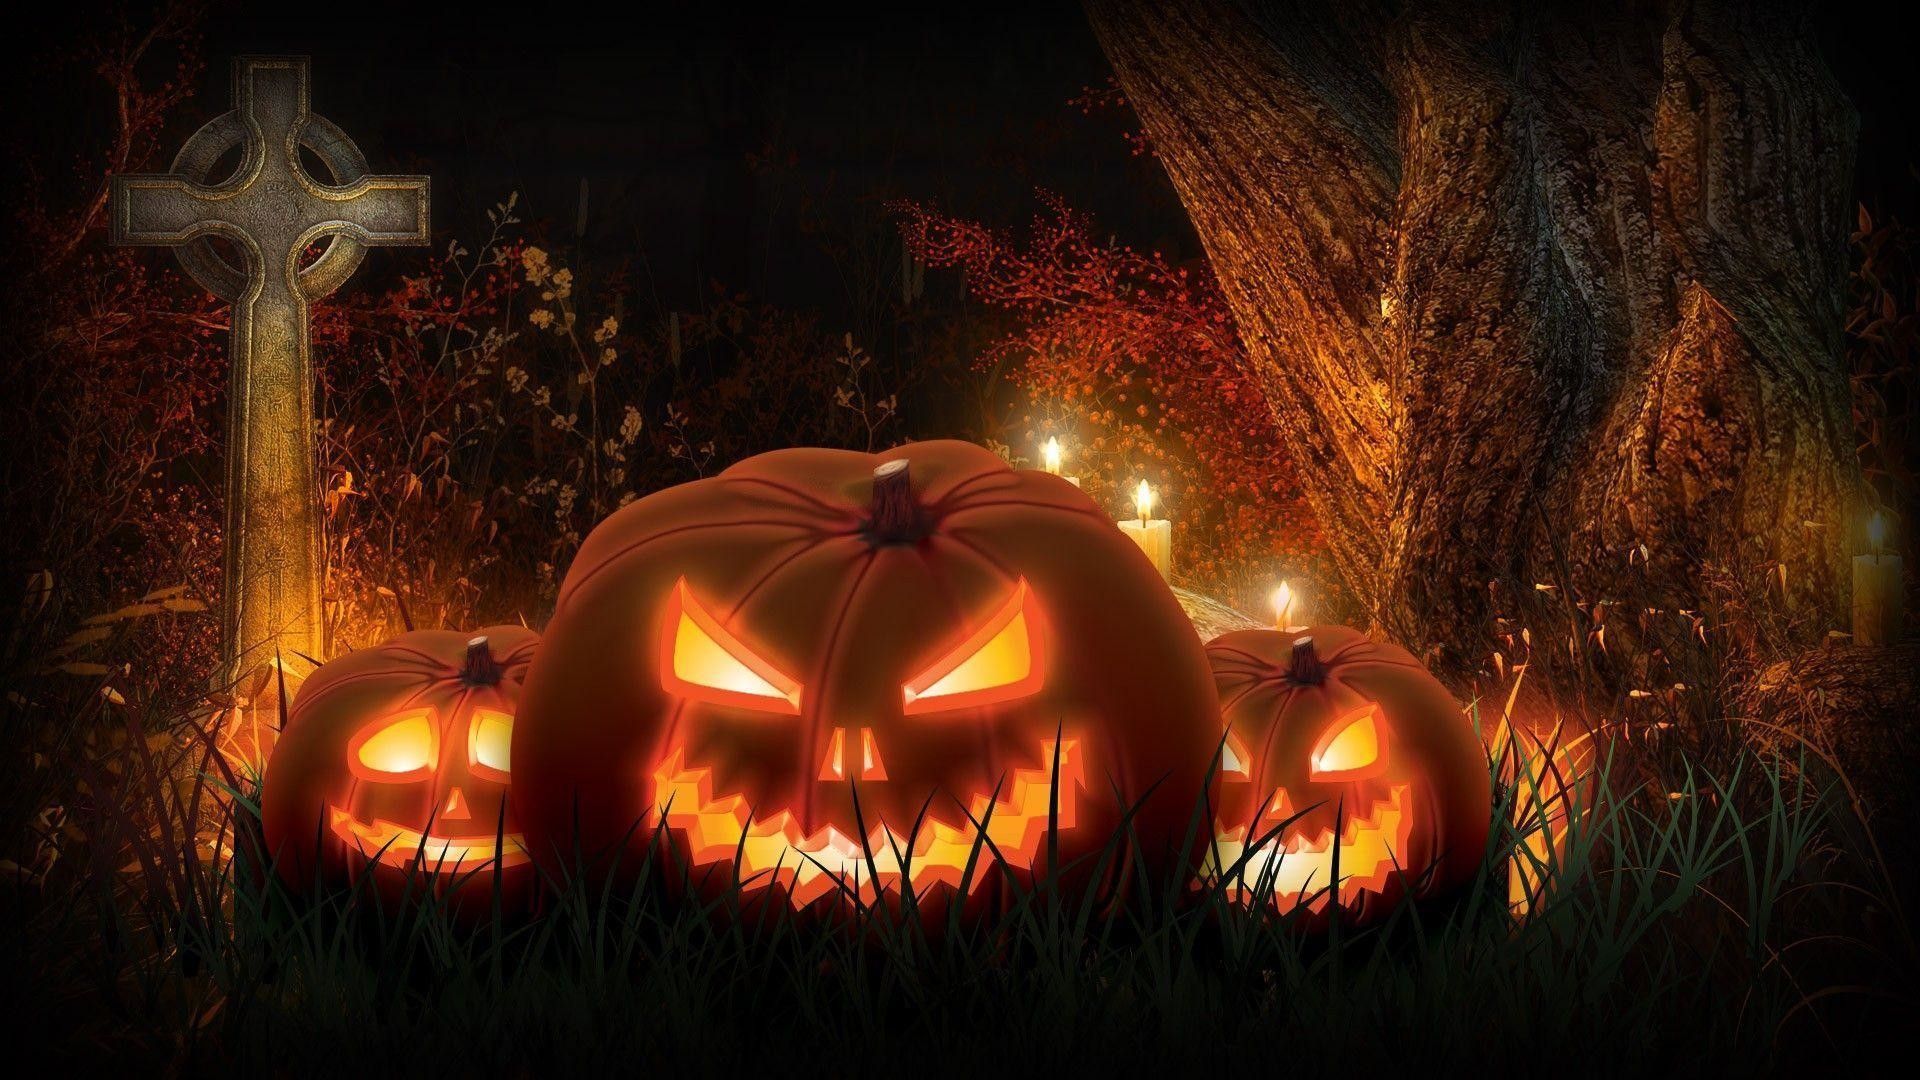 Scary Halloween Pumpkin Wallpaper 1080p Toobjects